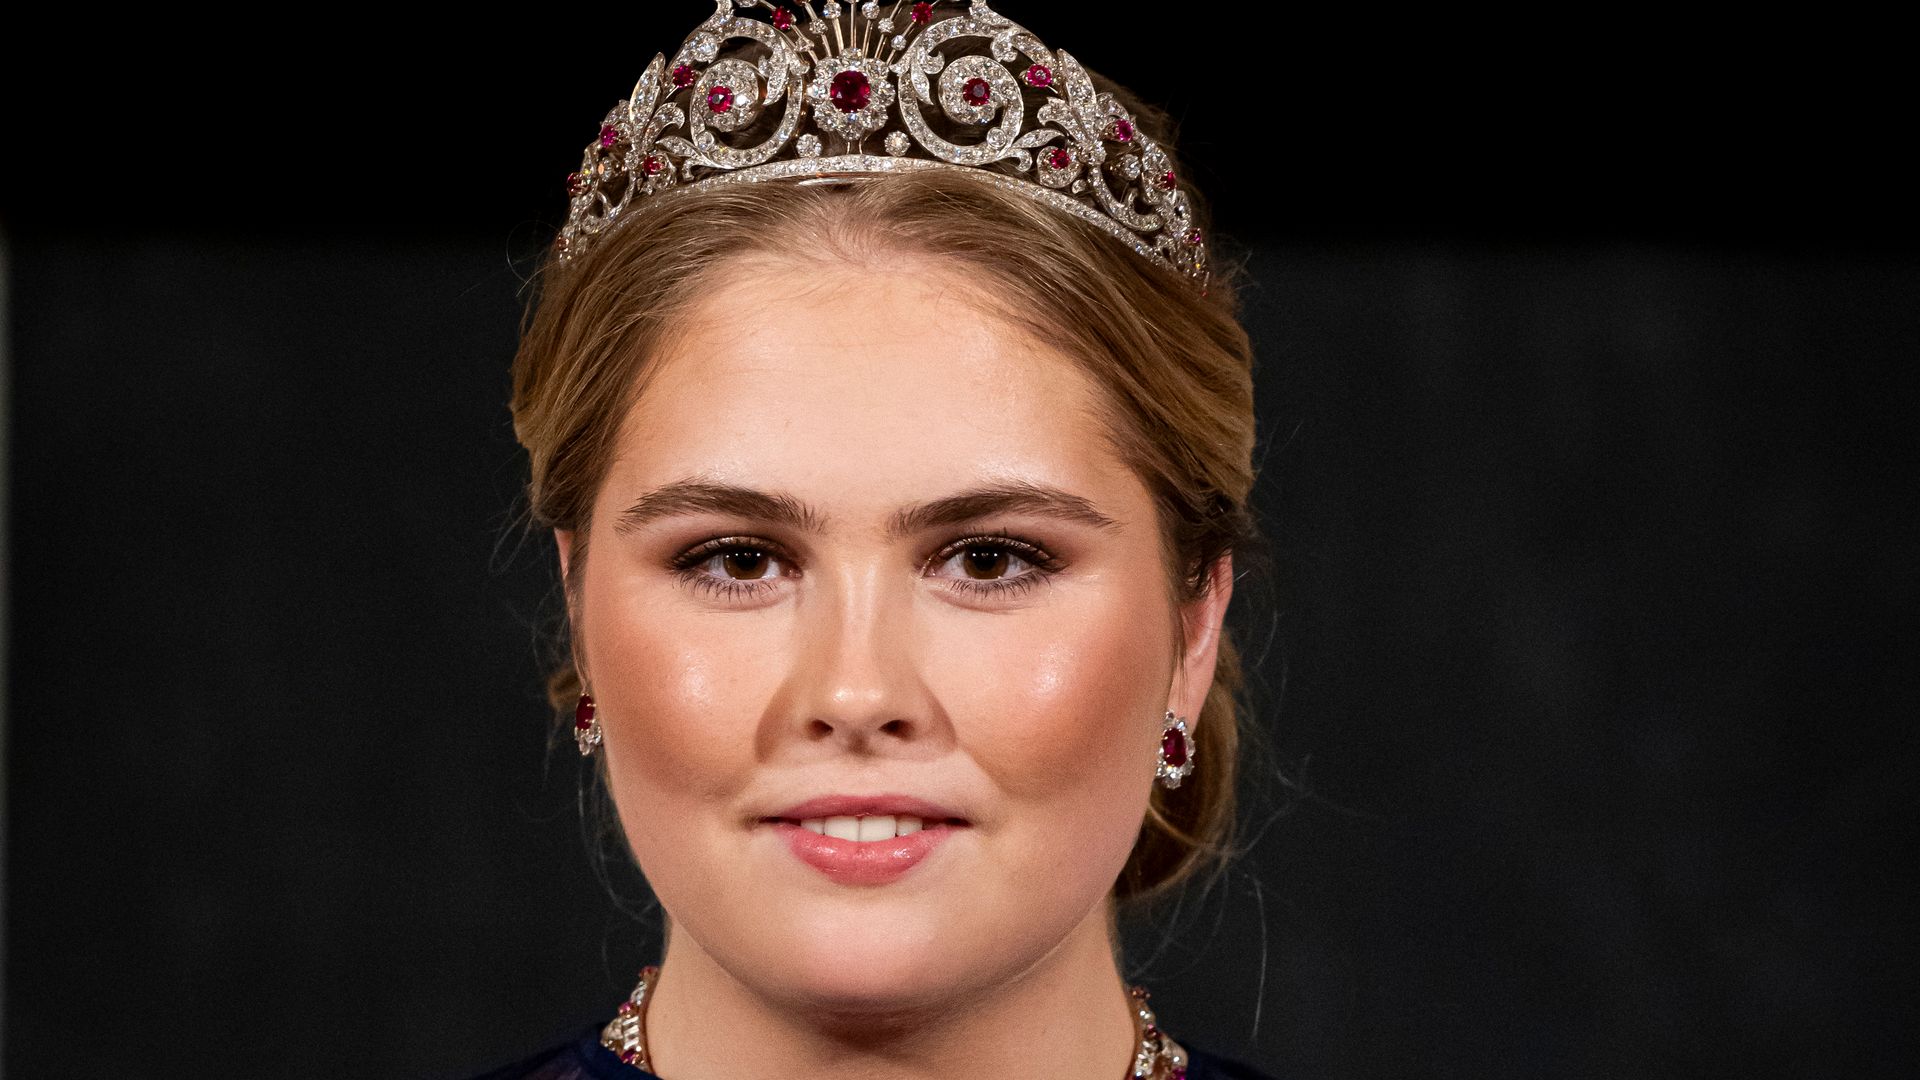 Princess Catharina-Amalia makes shimmering debut at first ever state banquet in Ruby Peacock tiara